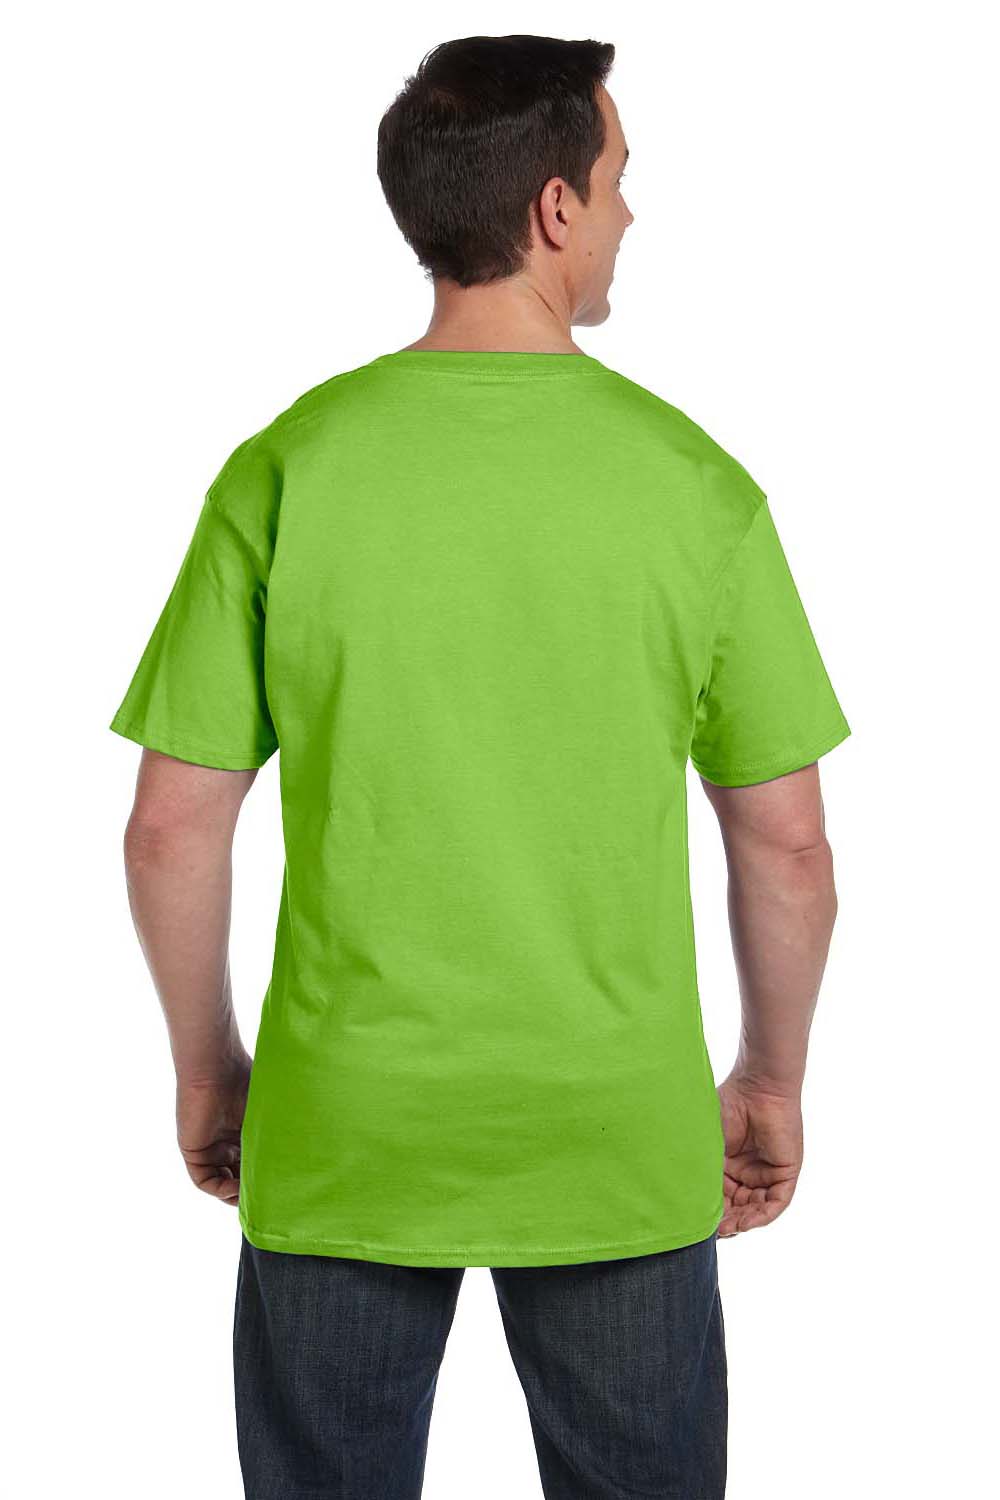 Hanes 5190P Mens Beefy-T Short Sleeve Crewneck T-Shirt w/ Pocket Lime Green Back